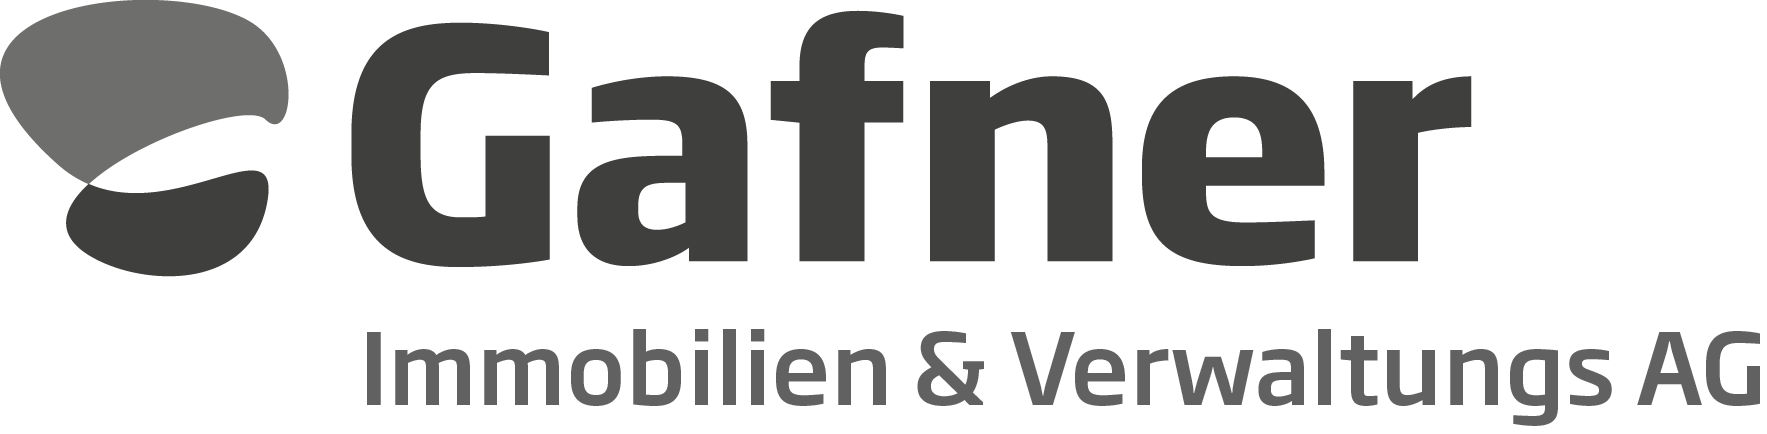 Gafner Immobilien & Verwaltungs AG